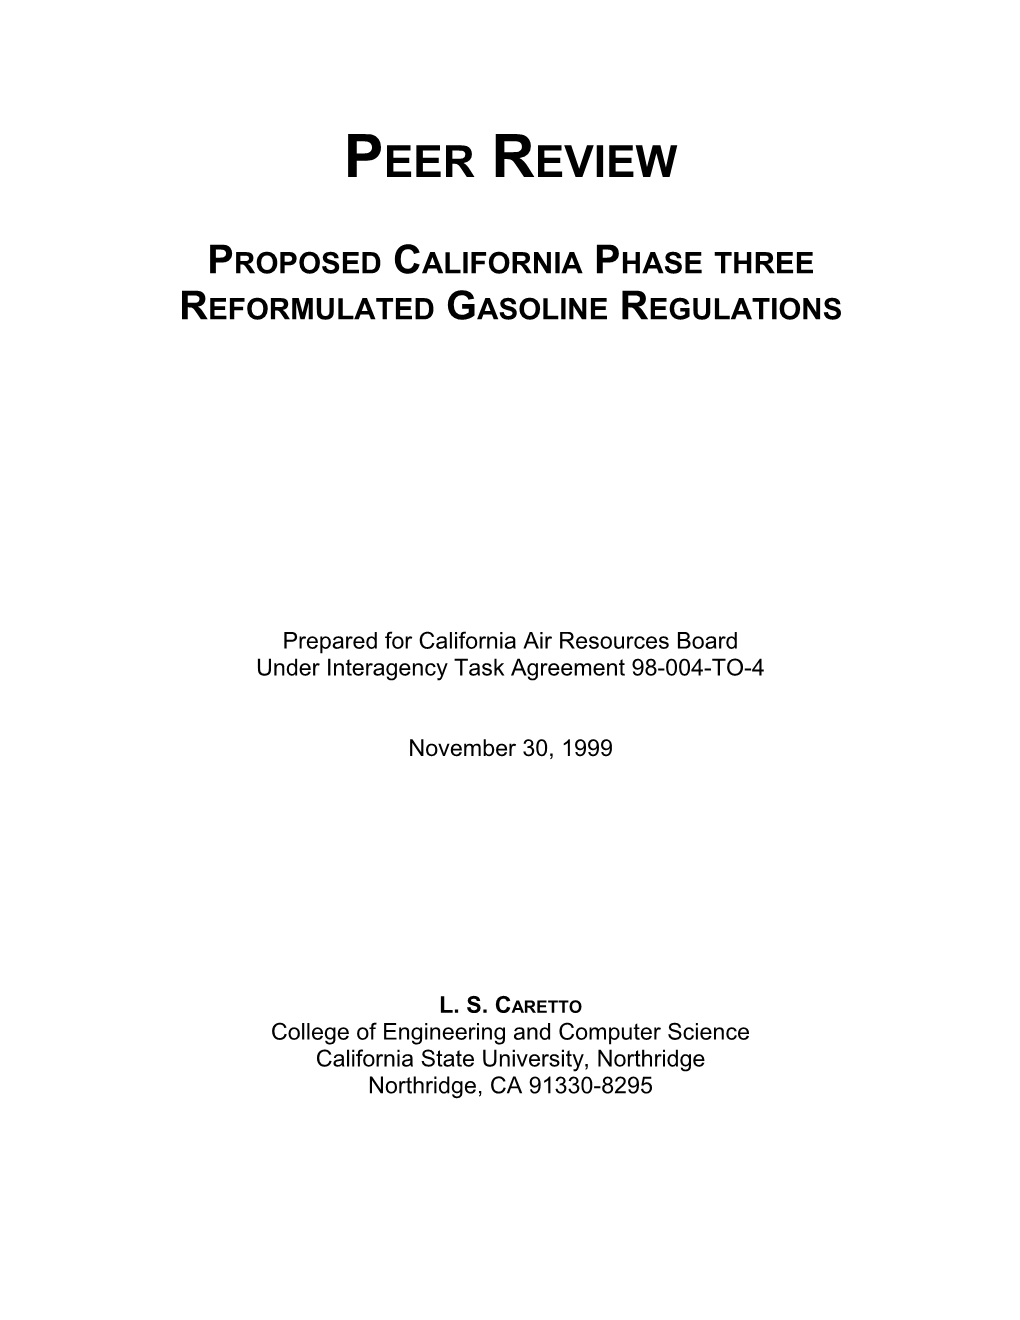 Proposed California Phase Three Reformulated Gasoline Regulations